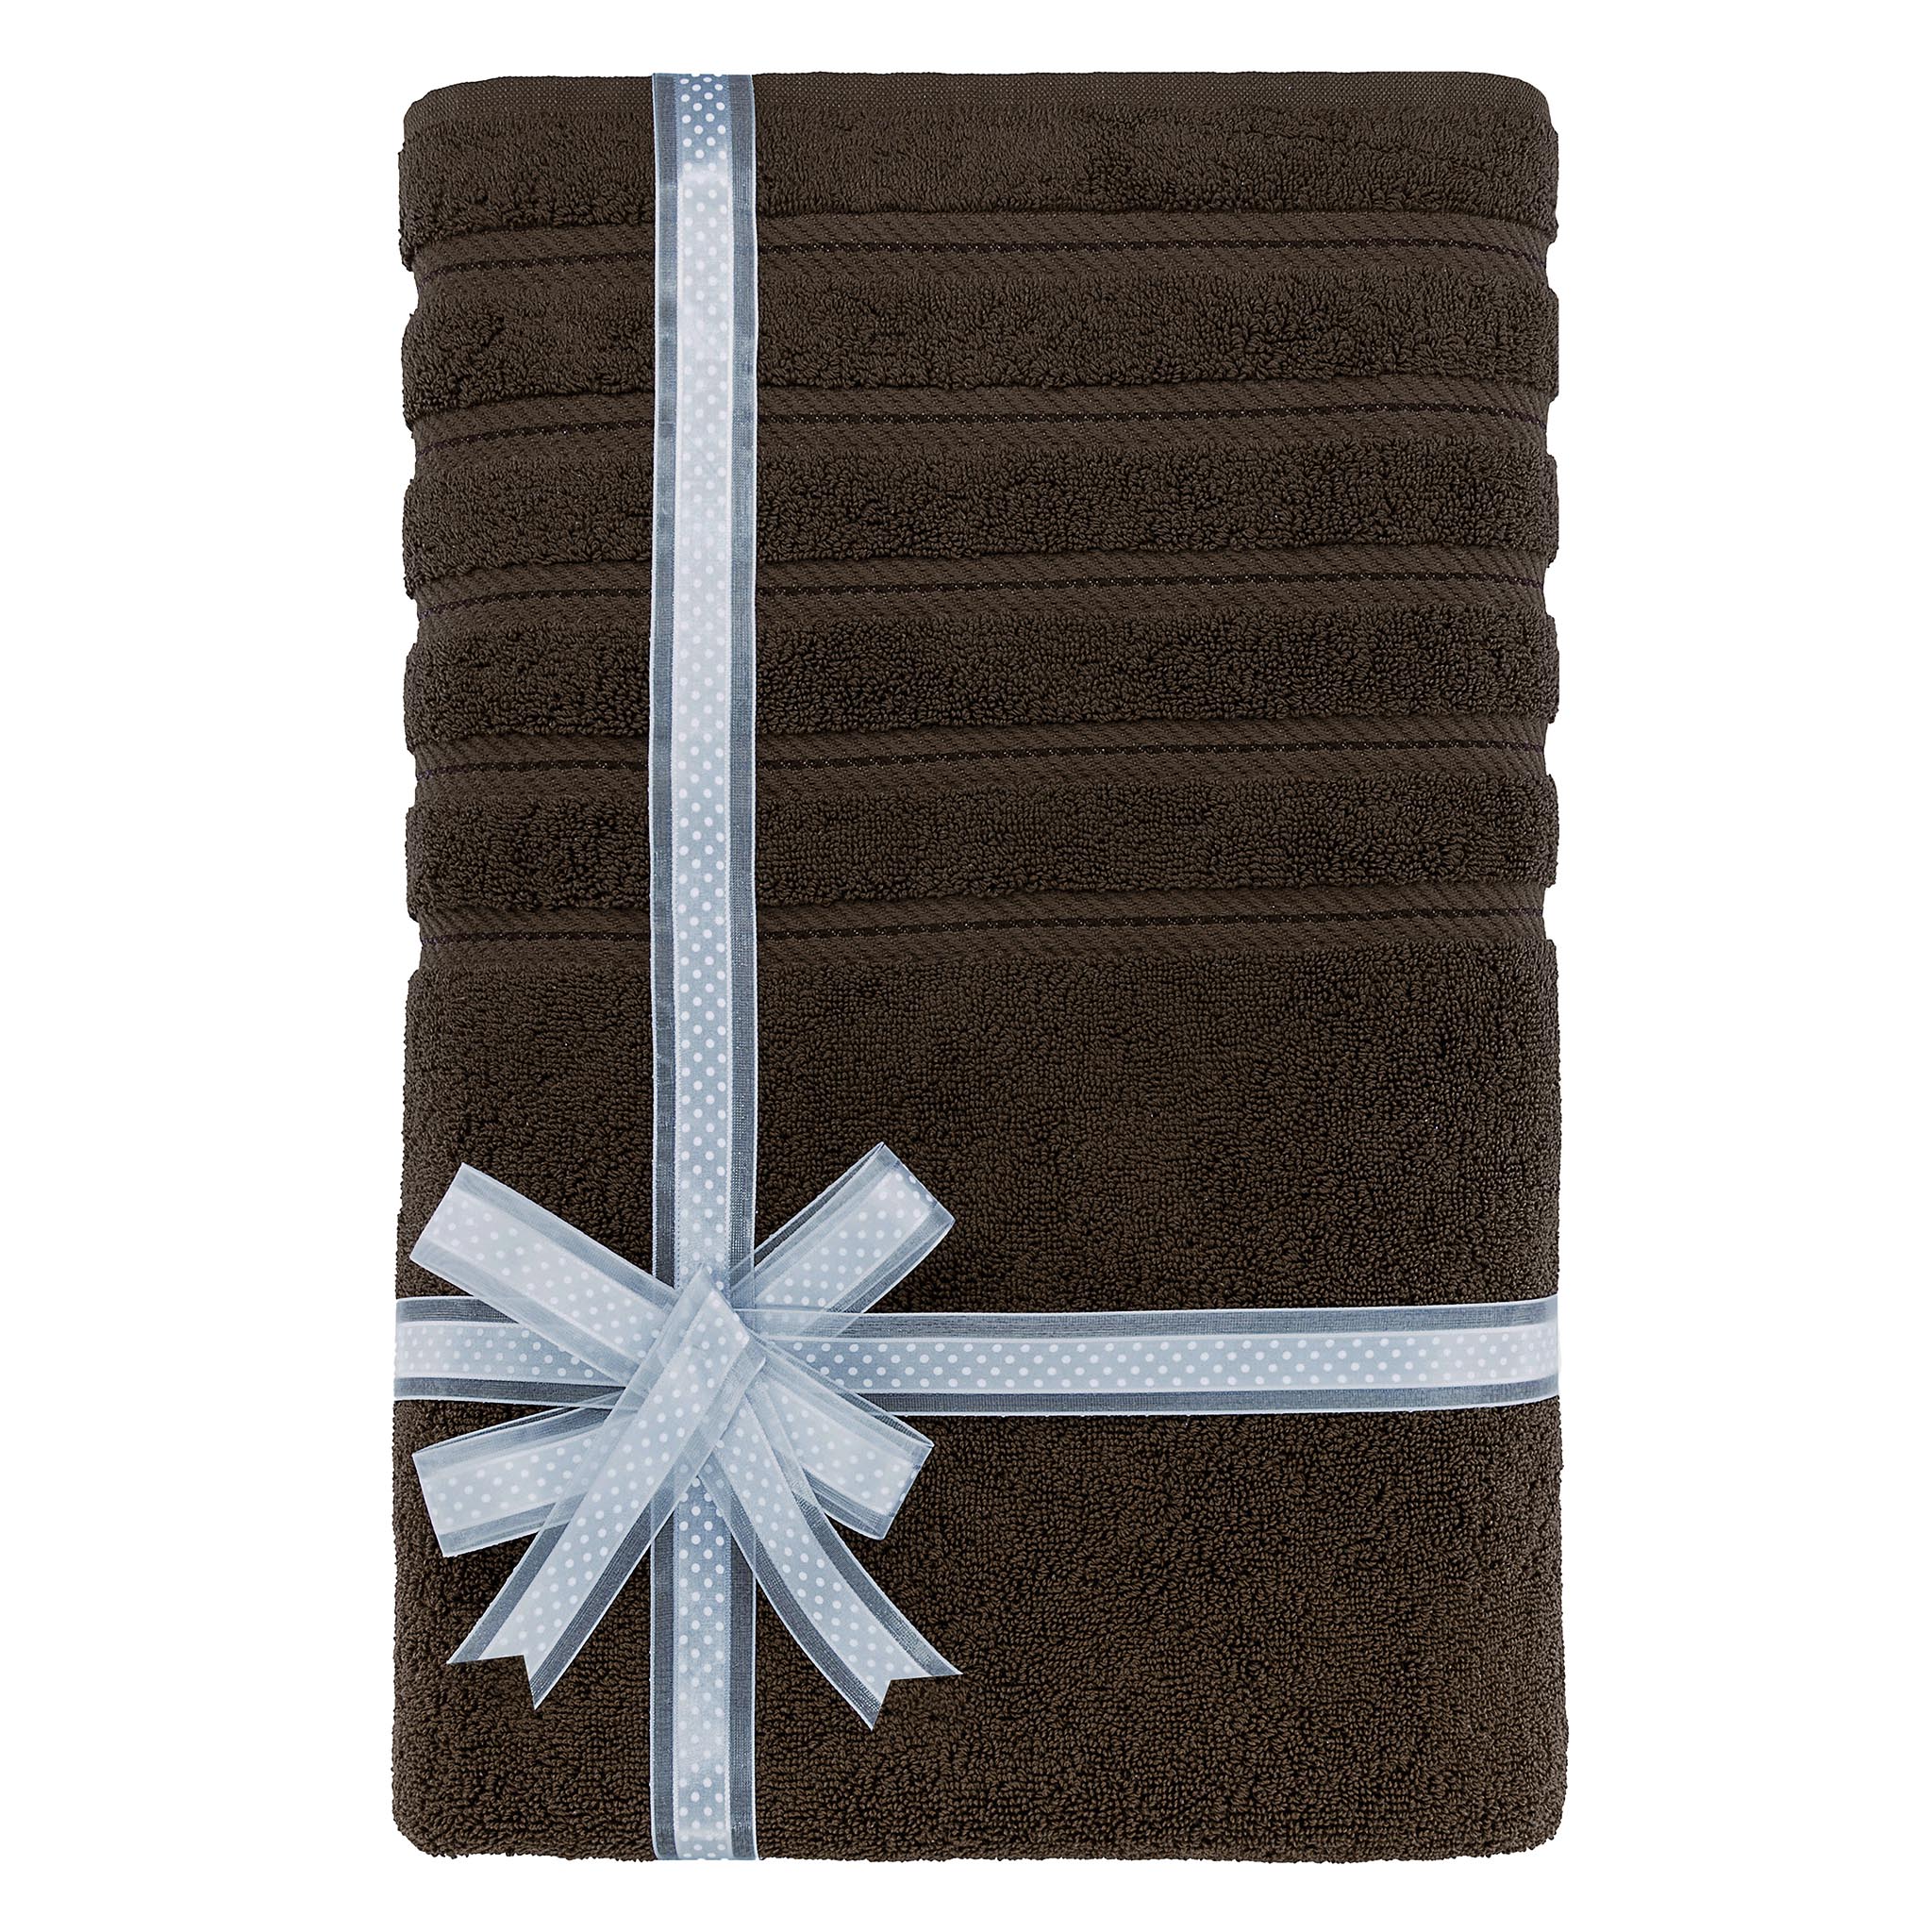 American Soft Linen 35x70 Inch 100% Turkish Cotton Jumbo Bath Sheet chocolate-brown-3